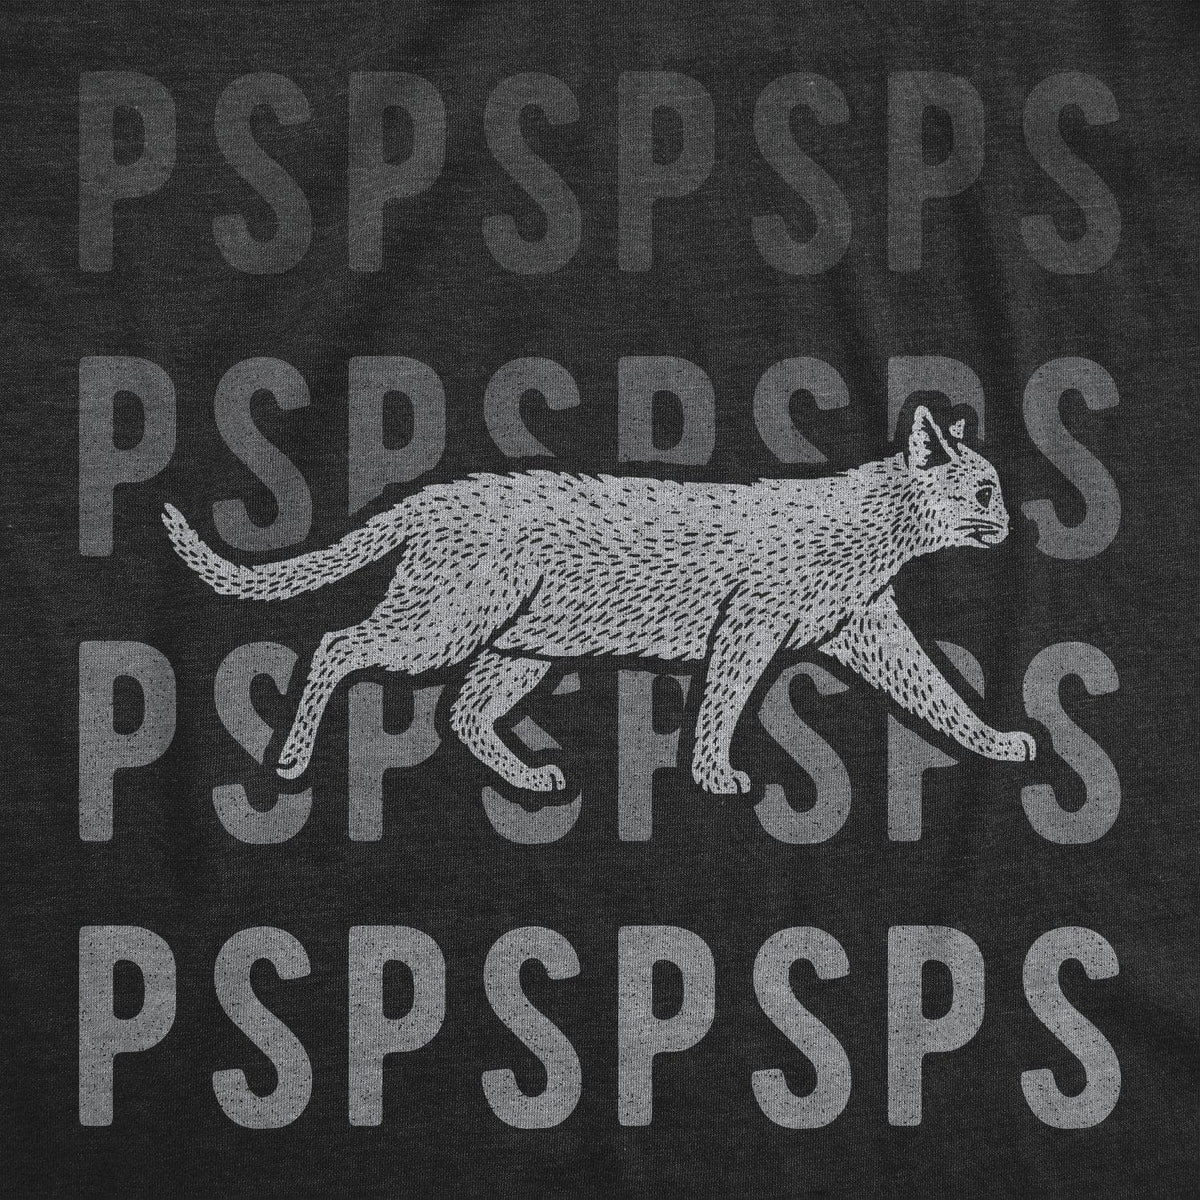 Pspspsps Women&#39;s Tshirt - Crazy Dog T-Shirts